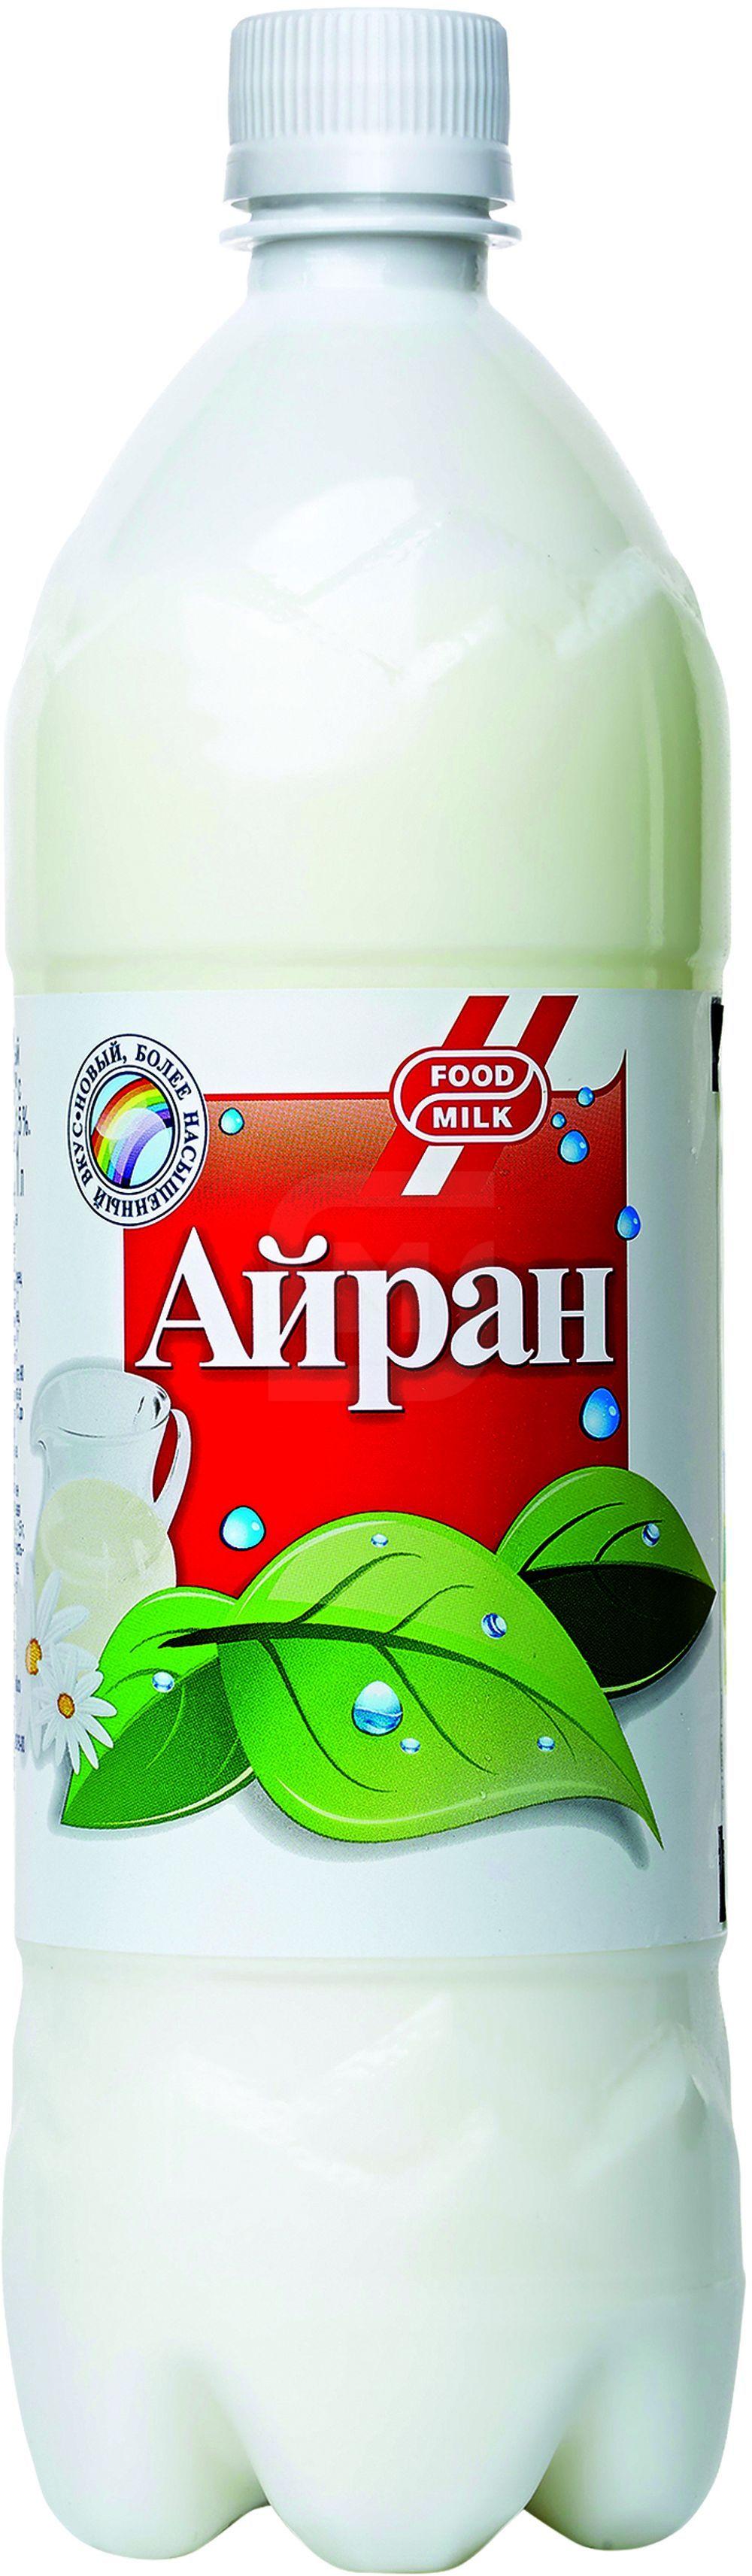 Айран Food Milk 1.5%